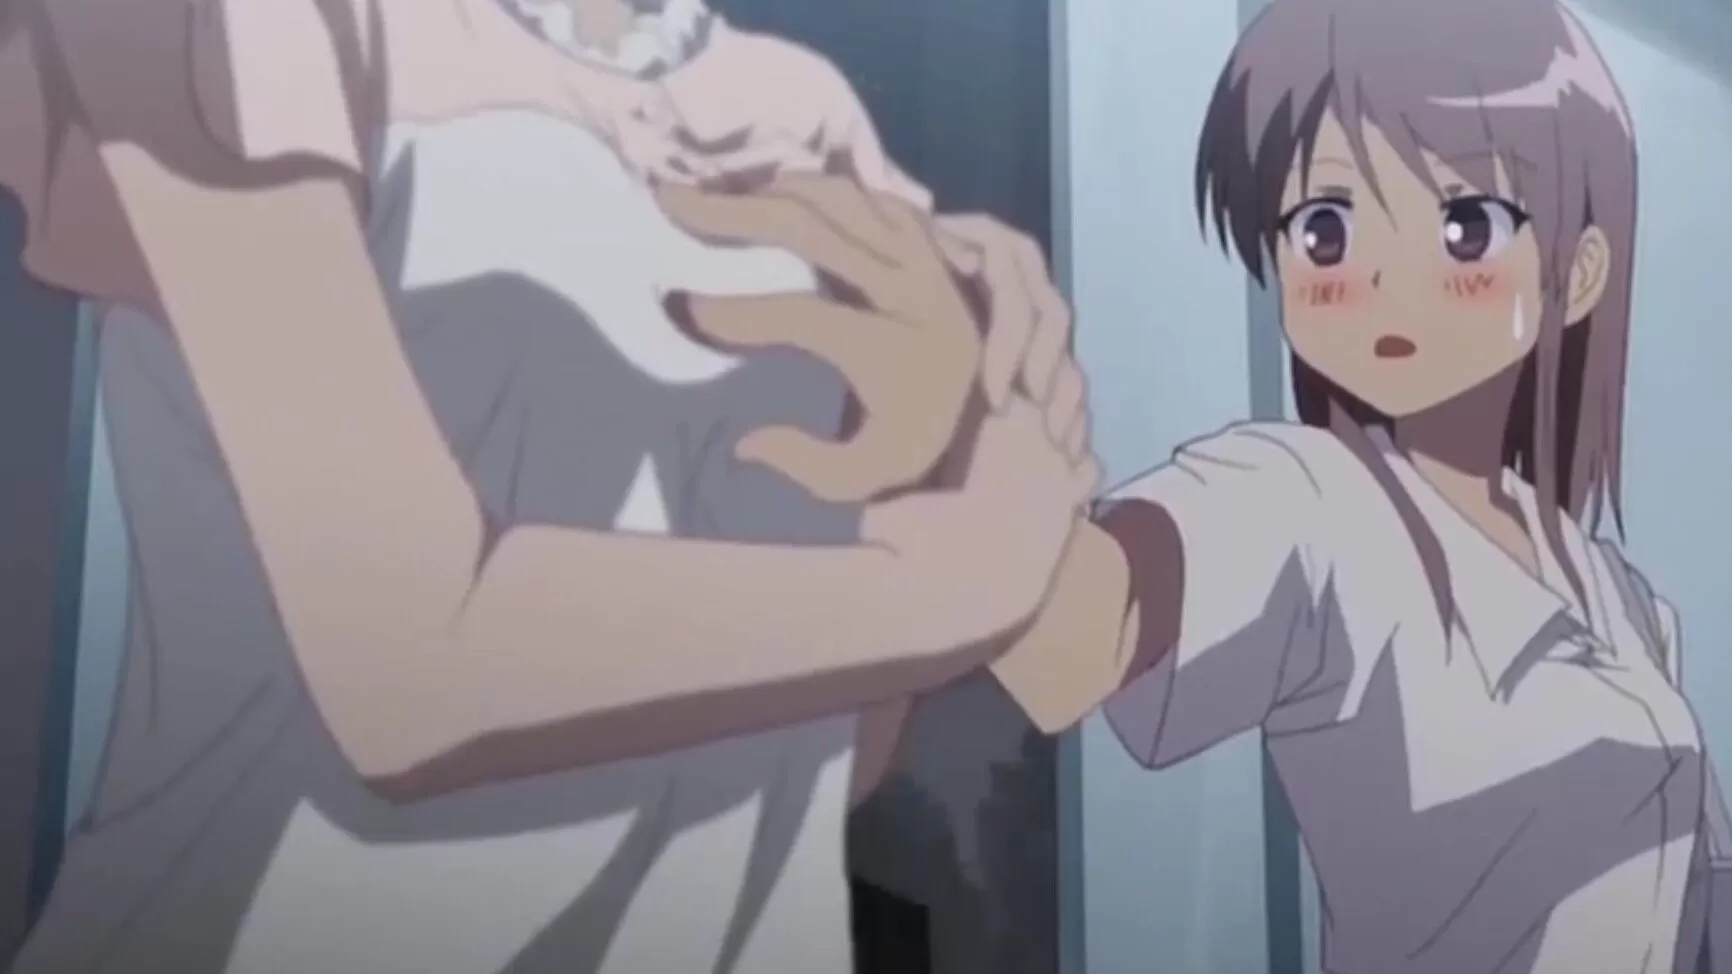 Anime Yuri 3some Porn - Kuttsukiboshi schoolgirls go to lesbian side in Hentai version